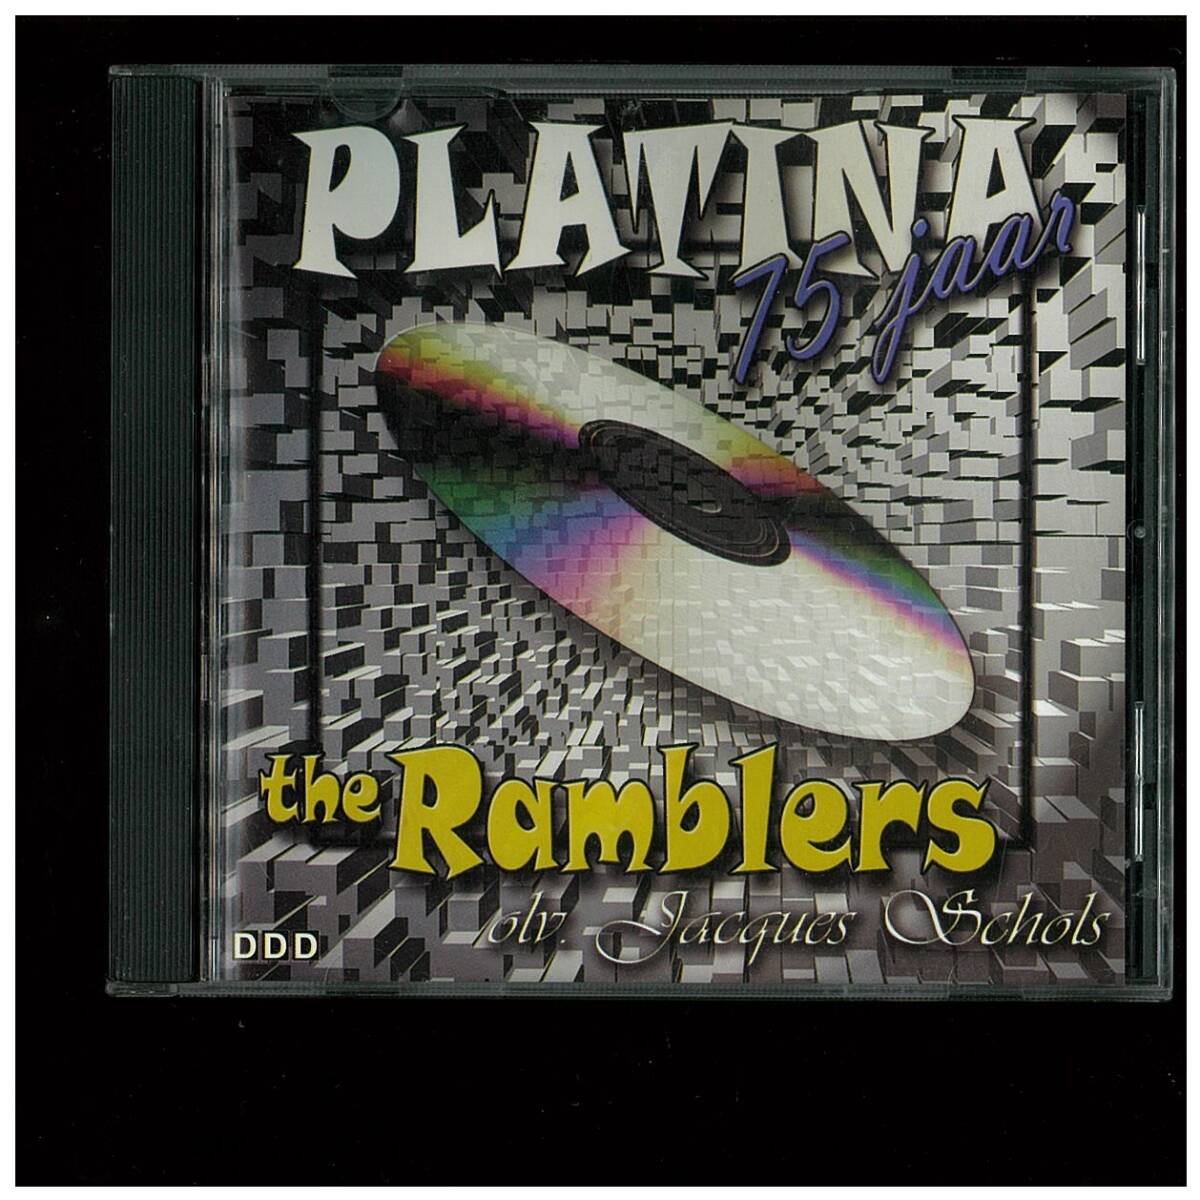 CD☆The Ramblers☆Plantina 75 jaar☆Jacques Schols☆200113☆オランダ盤_画像1